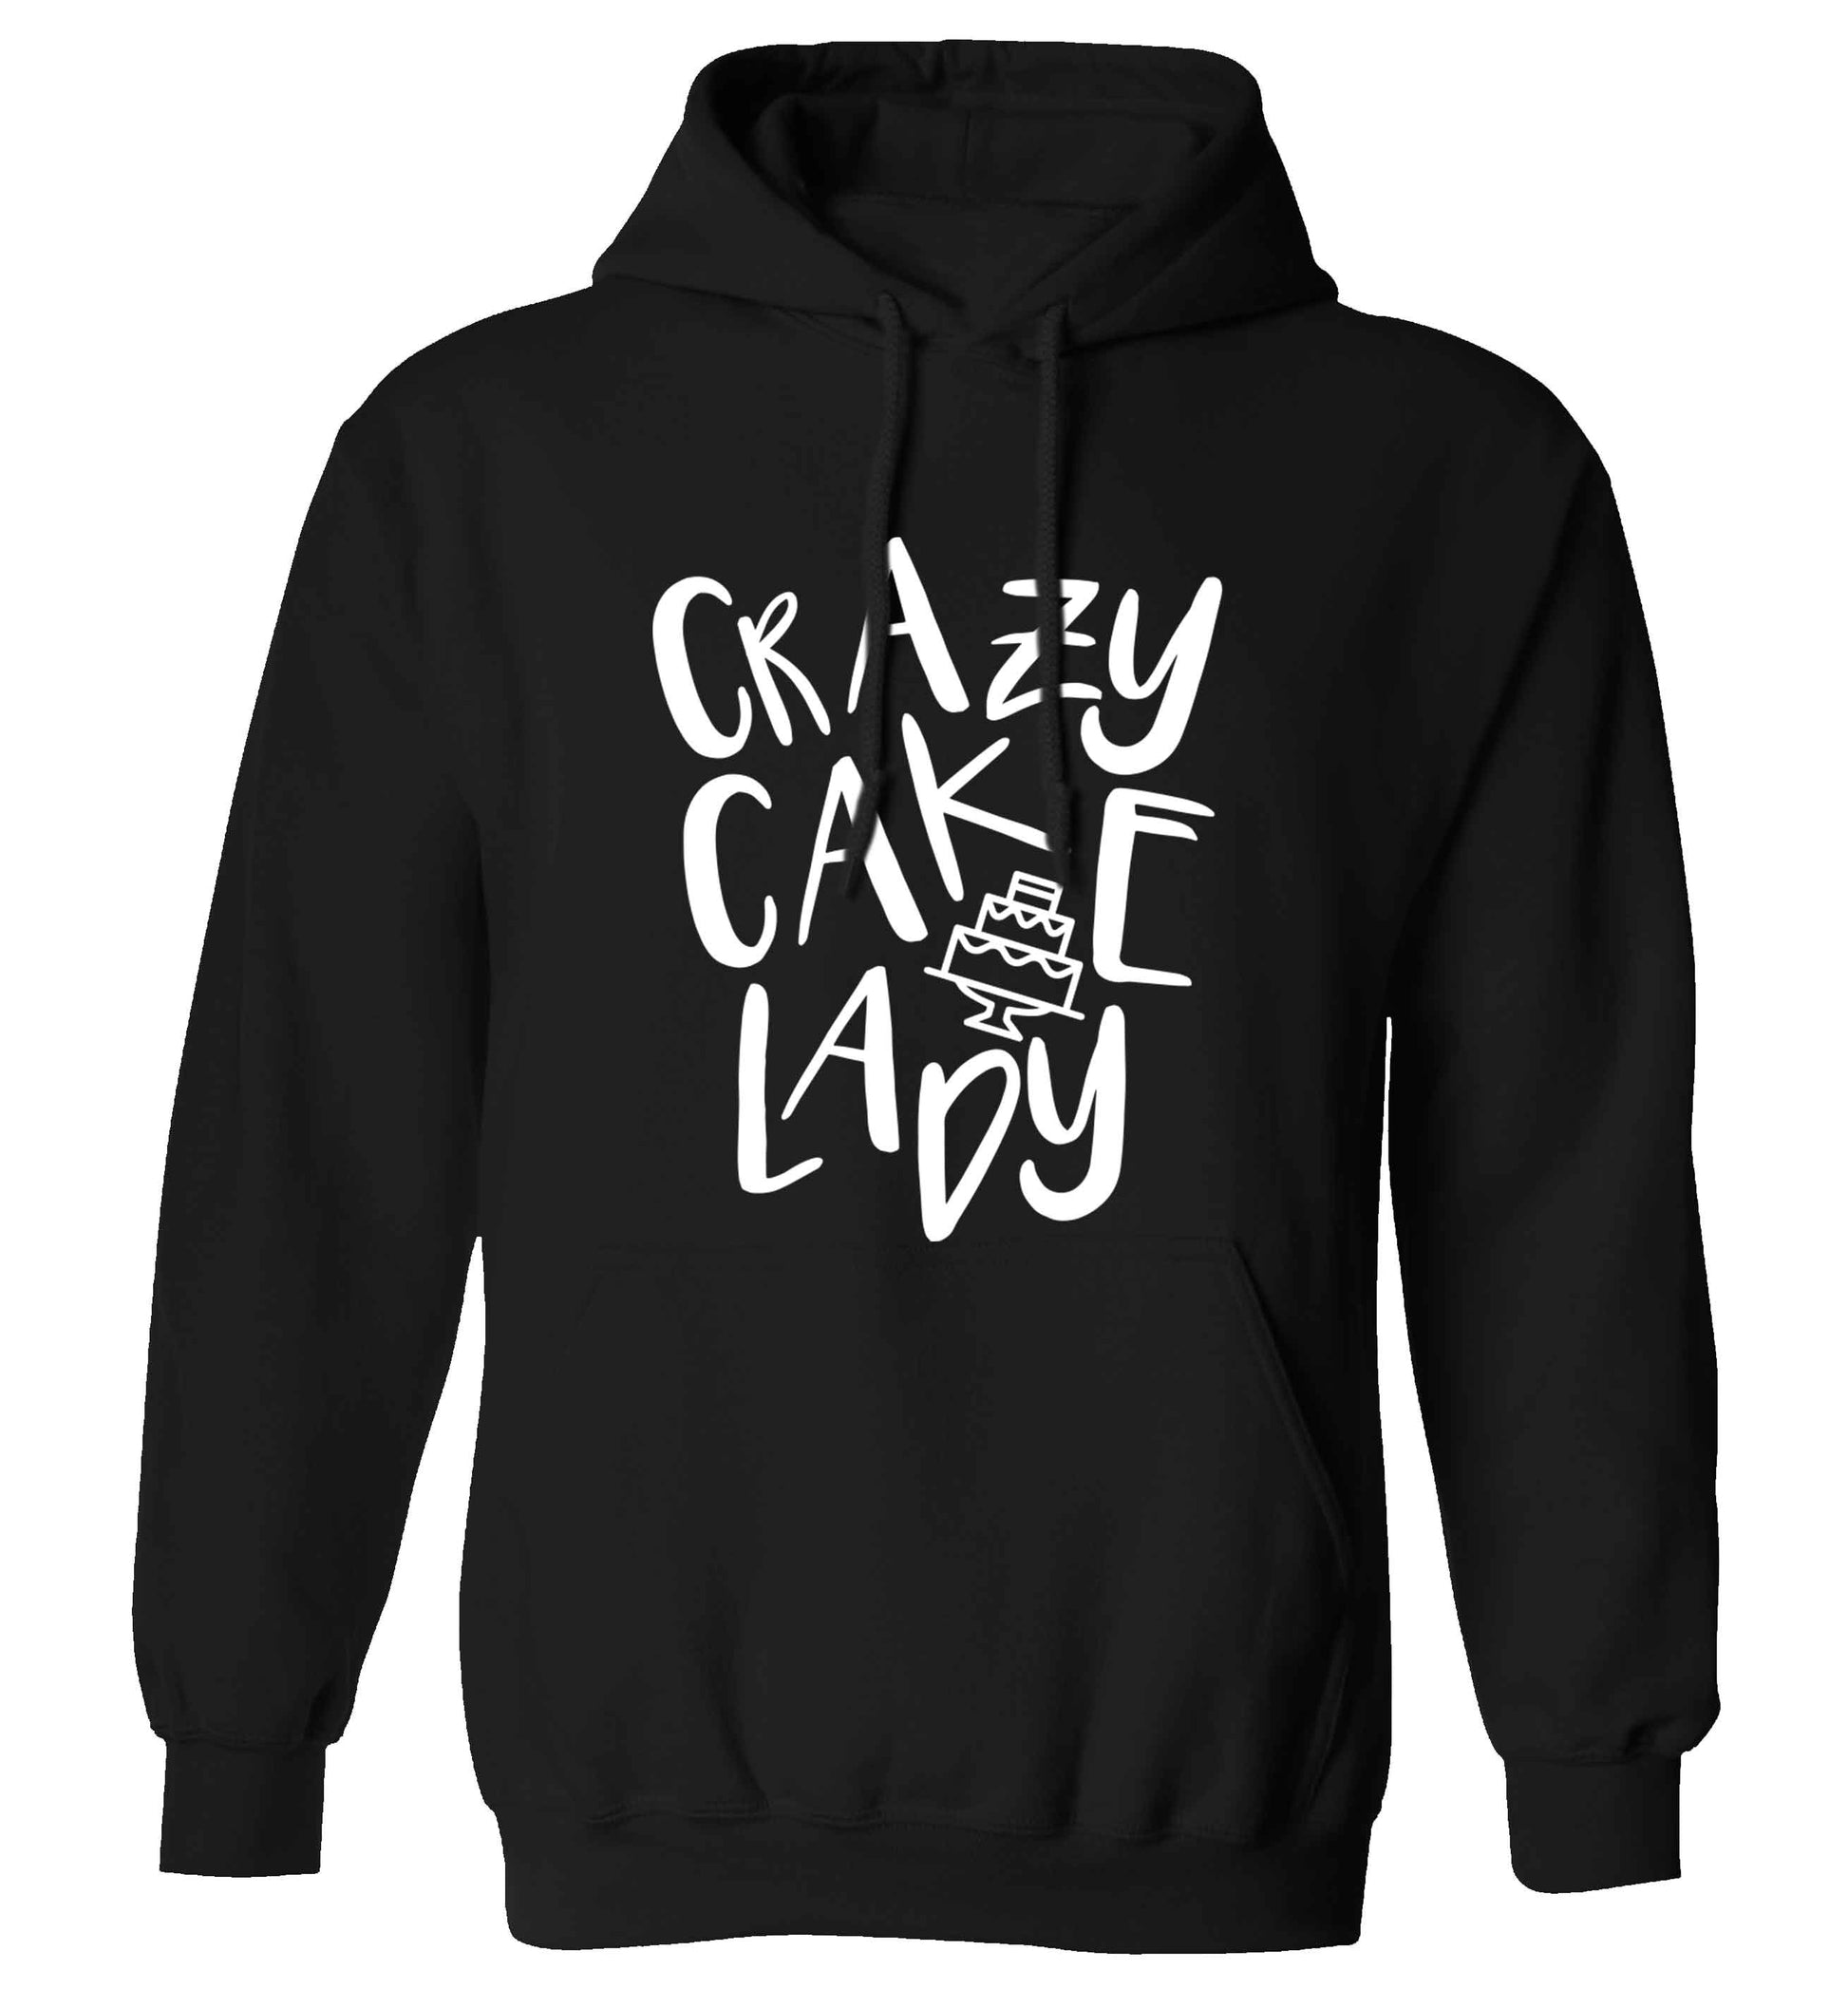 Crazy cake lady adults unisex black hoodie 2XL